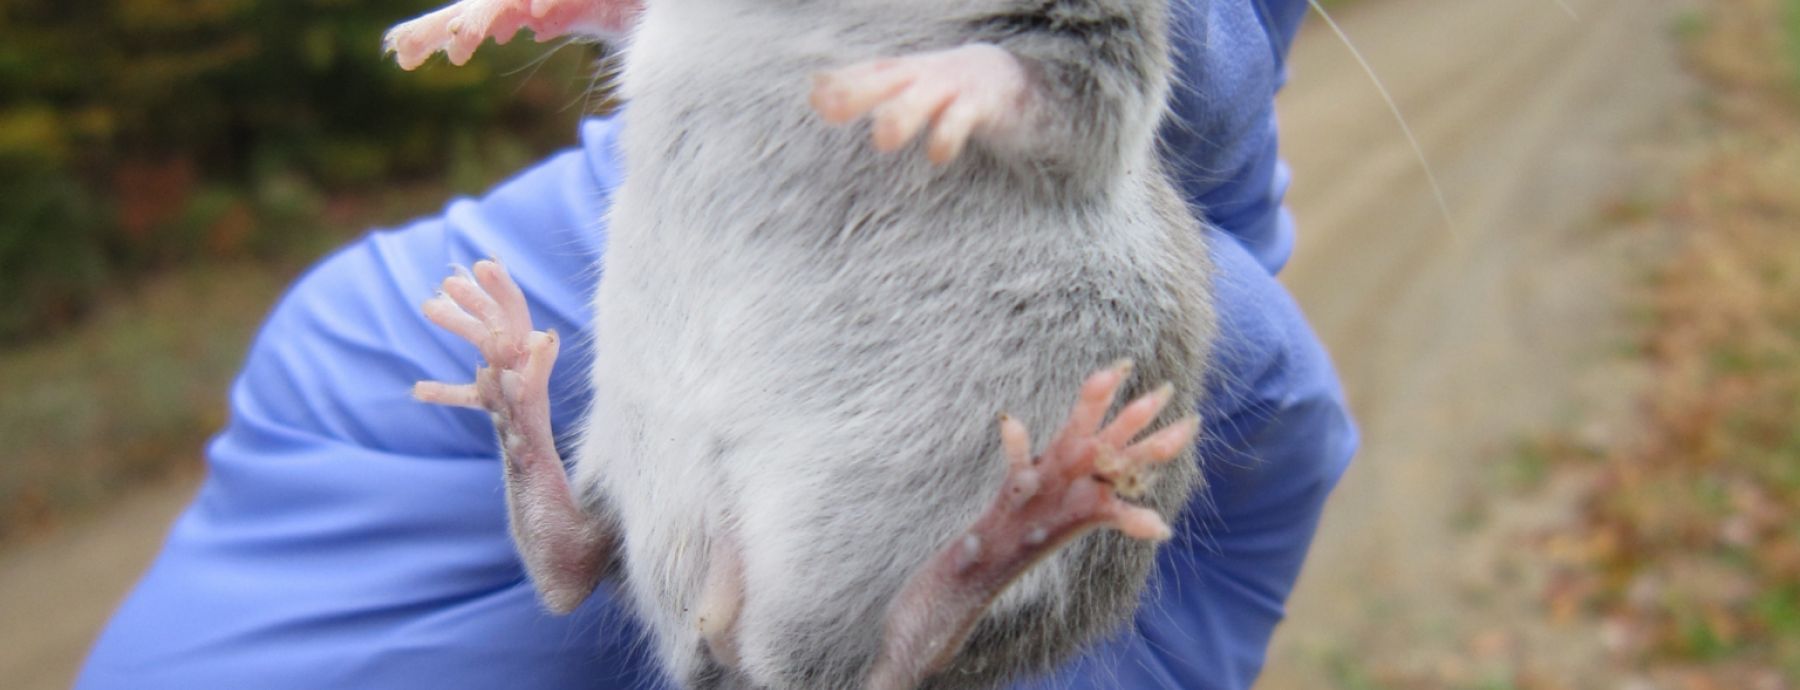 Novel hepatitis-like viruses discovered in wild rodents, raising hopes for laboratory models of huma